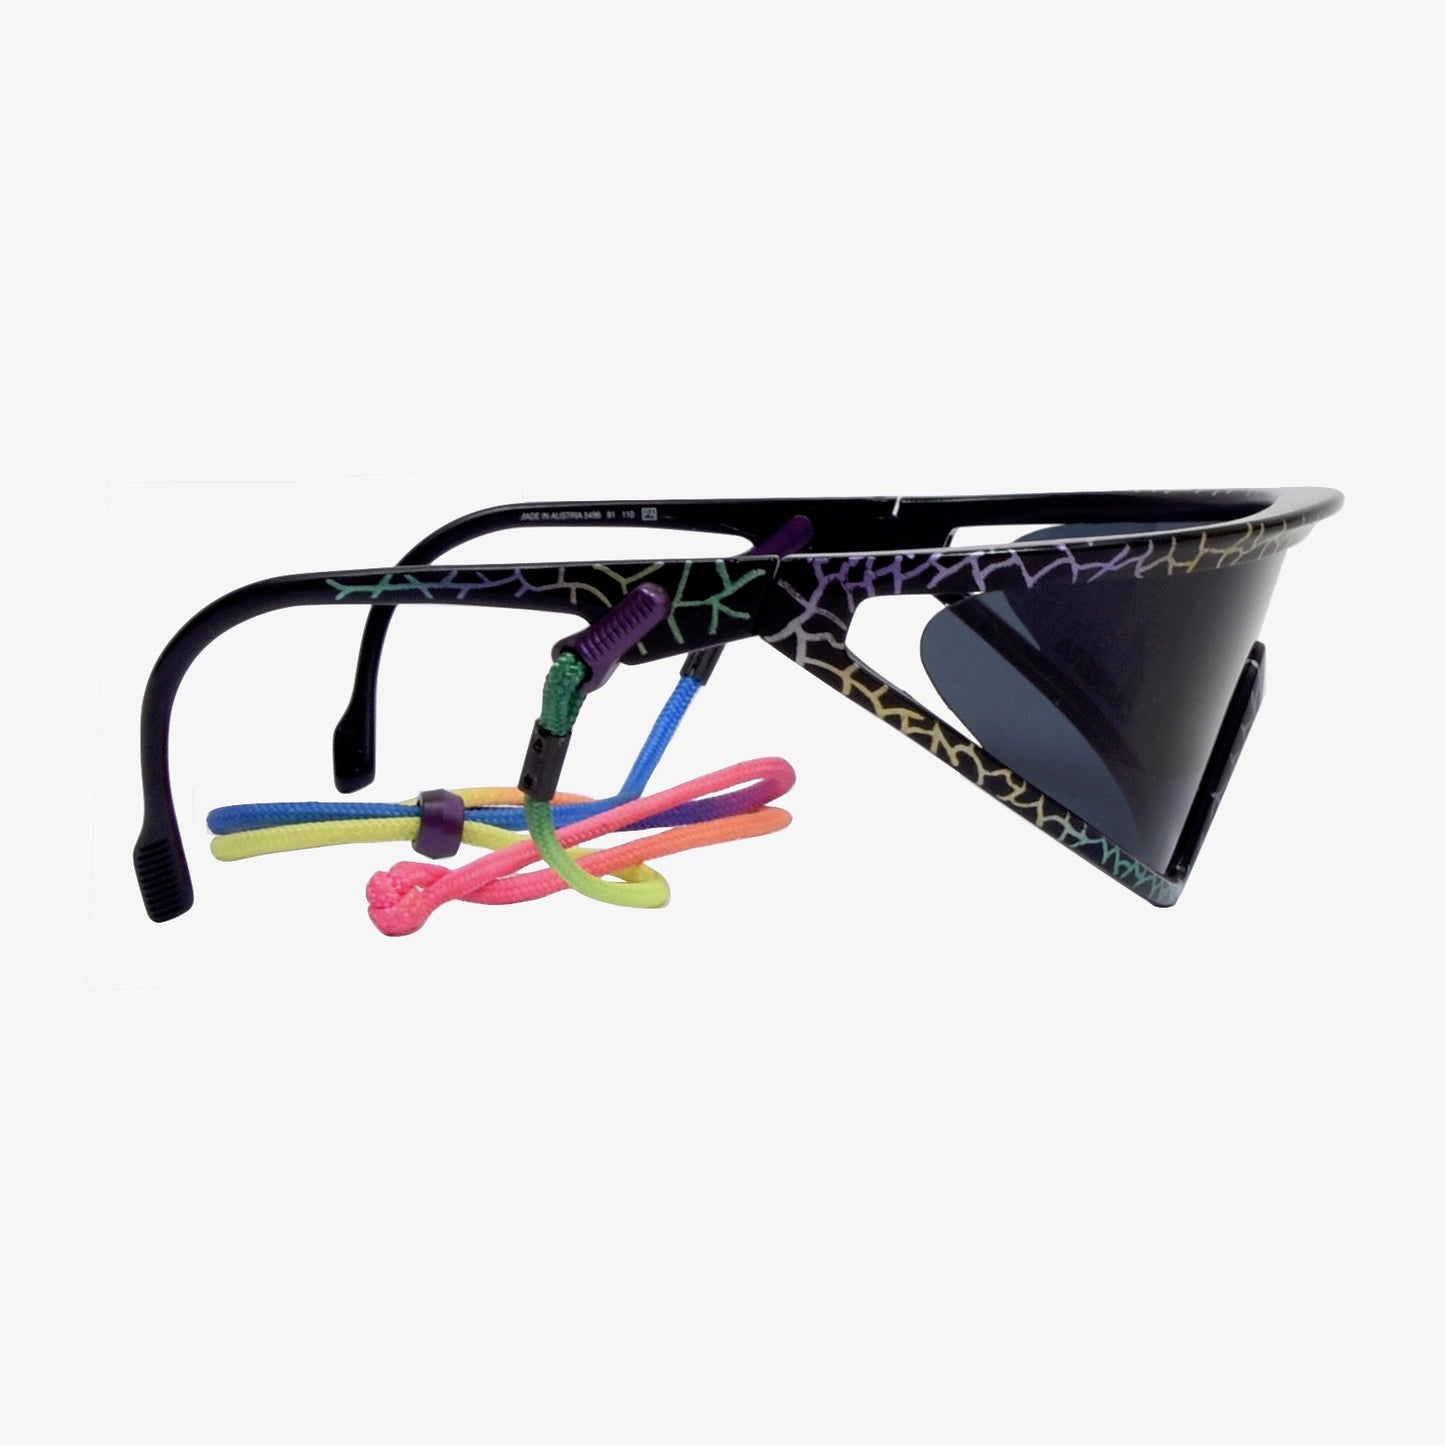 Vintage Carrera Mod. 5496 Shield Sunglasses - Rainbow